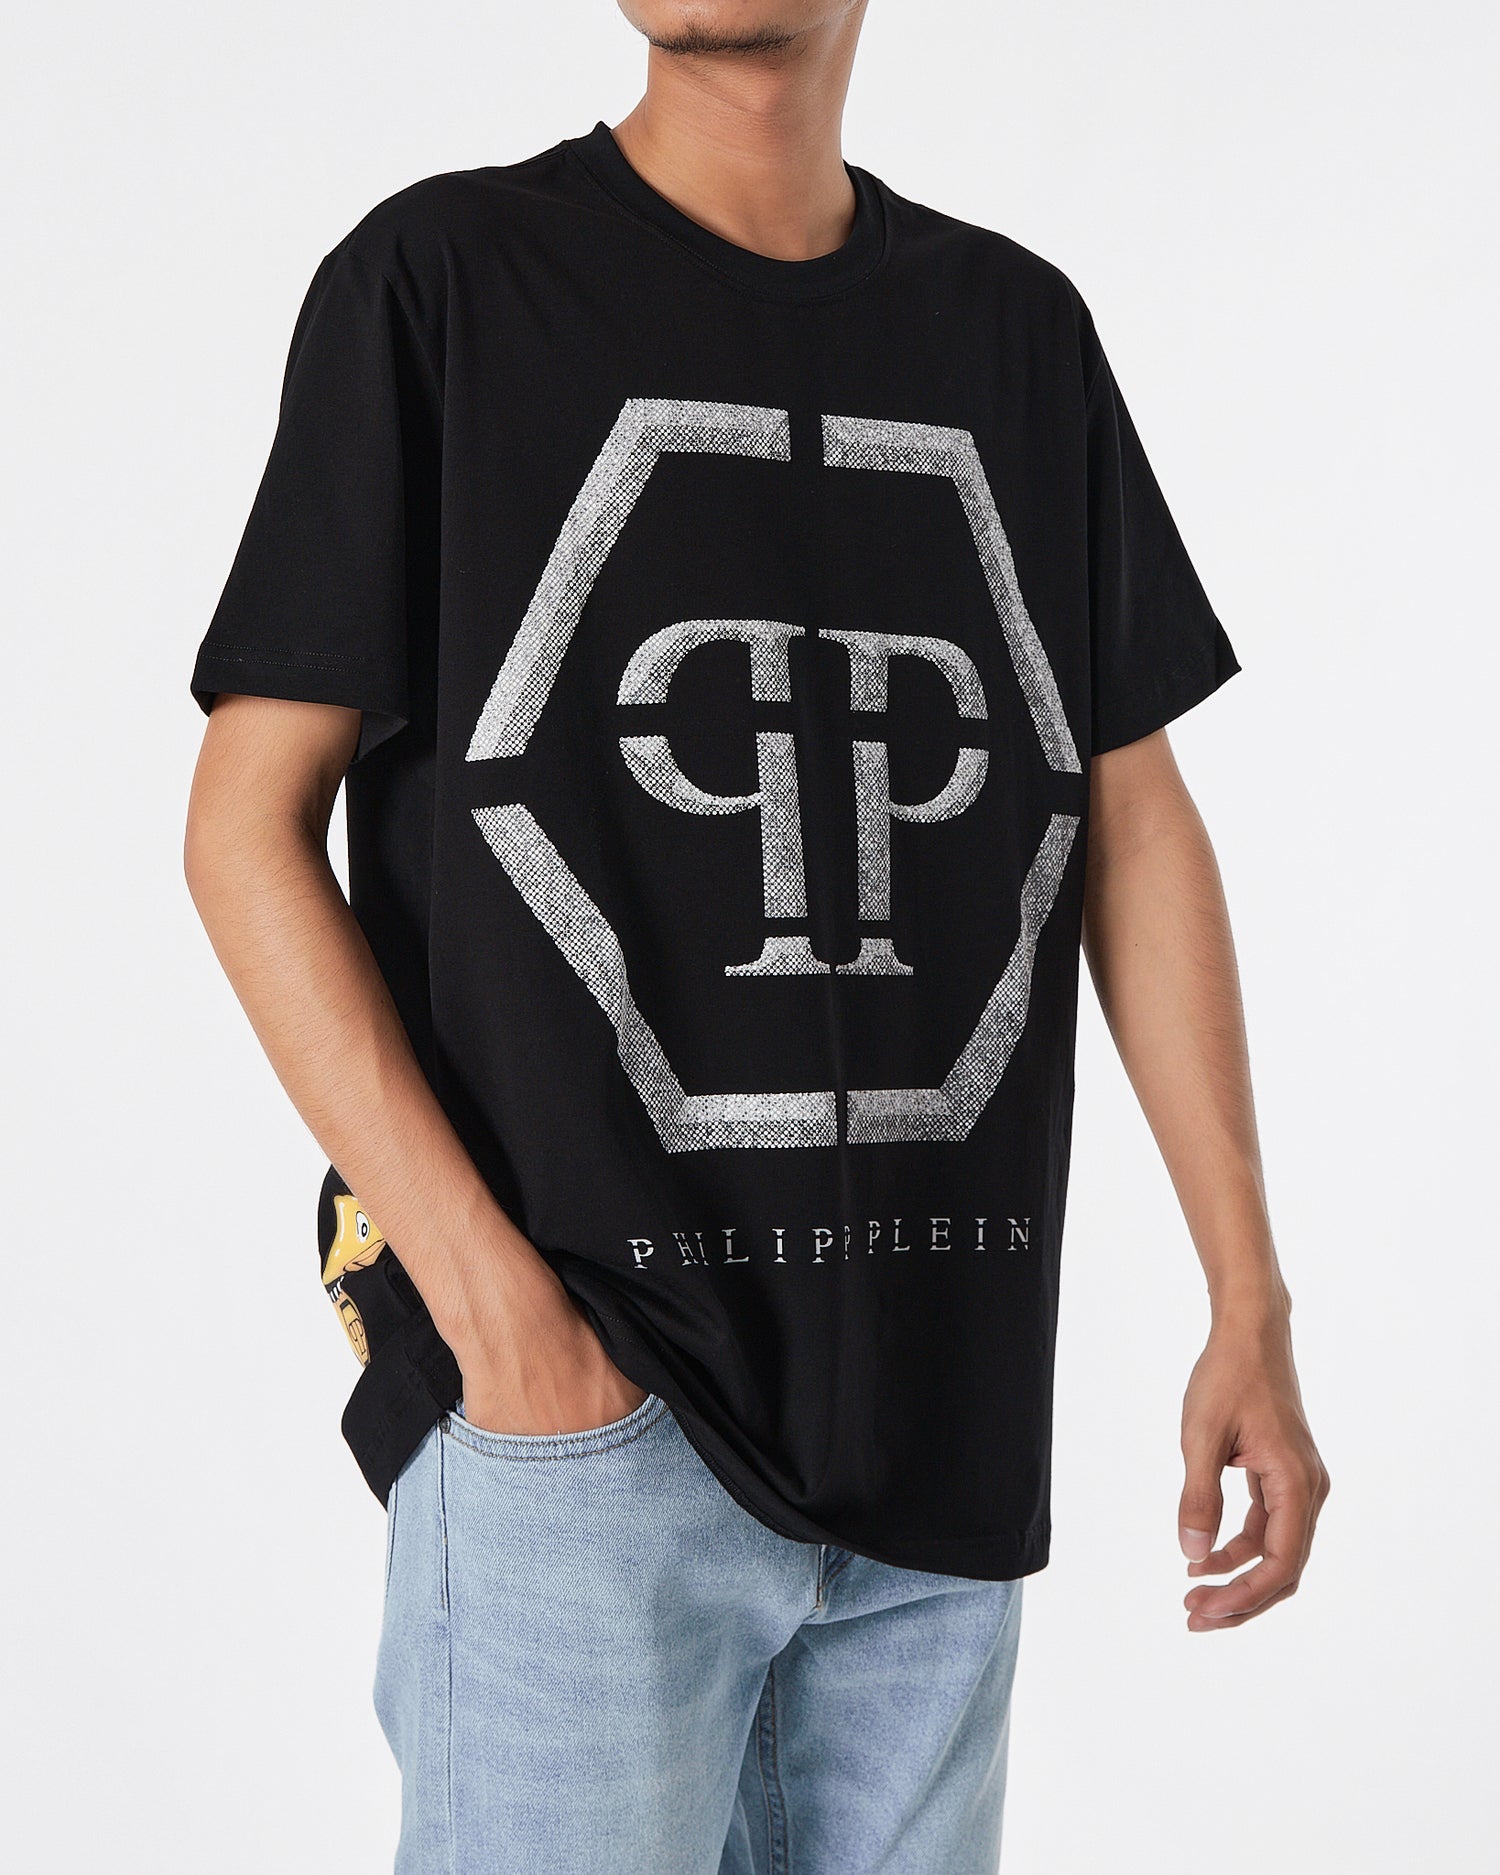 PP Logo Printed Men Black T-Shirt 15.90